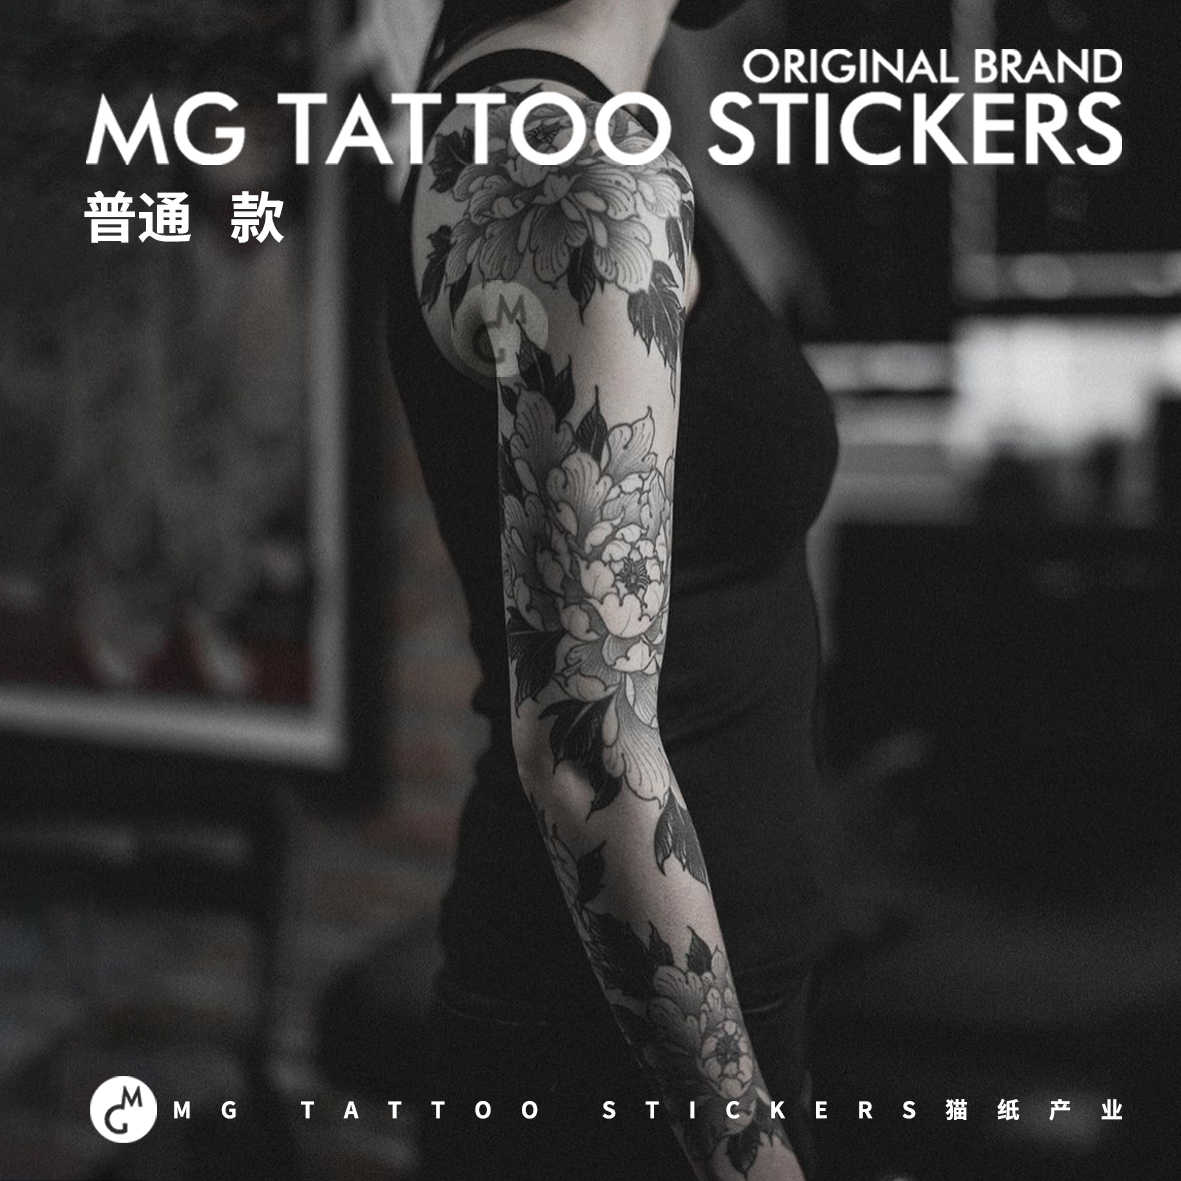 MG tattoo 日式暗黑冷淡系拼接花臂花朵大图唯美个性网红纹身贴纸